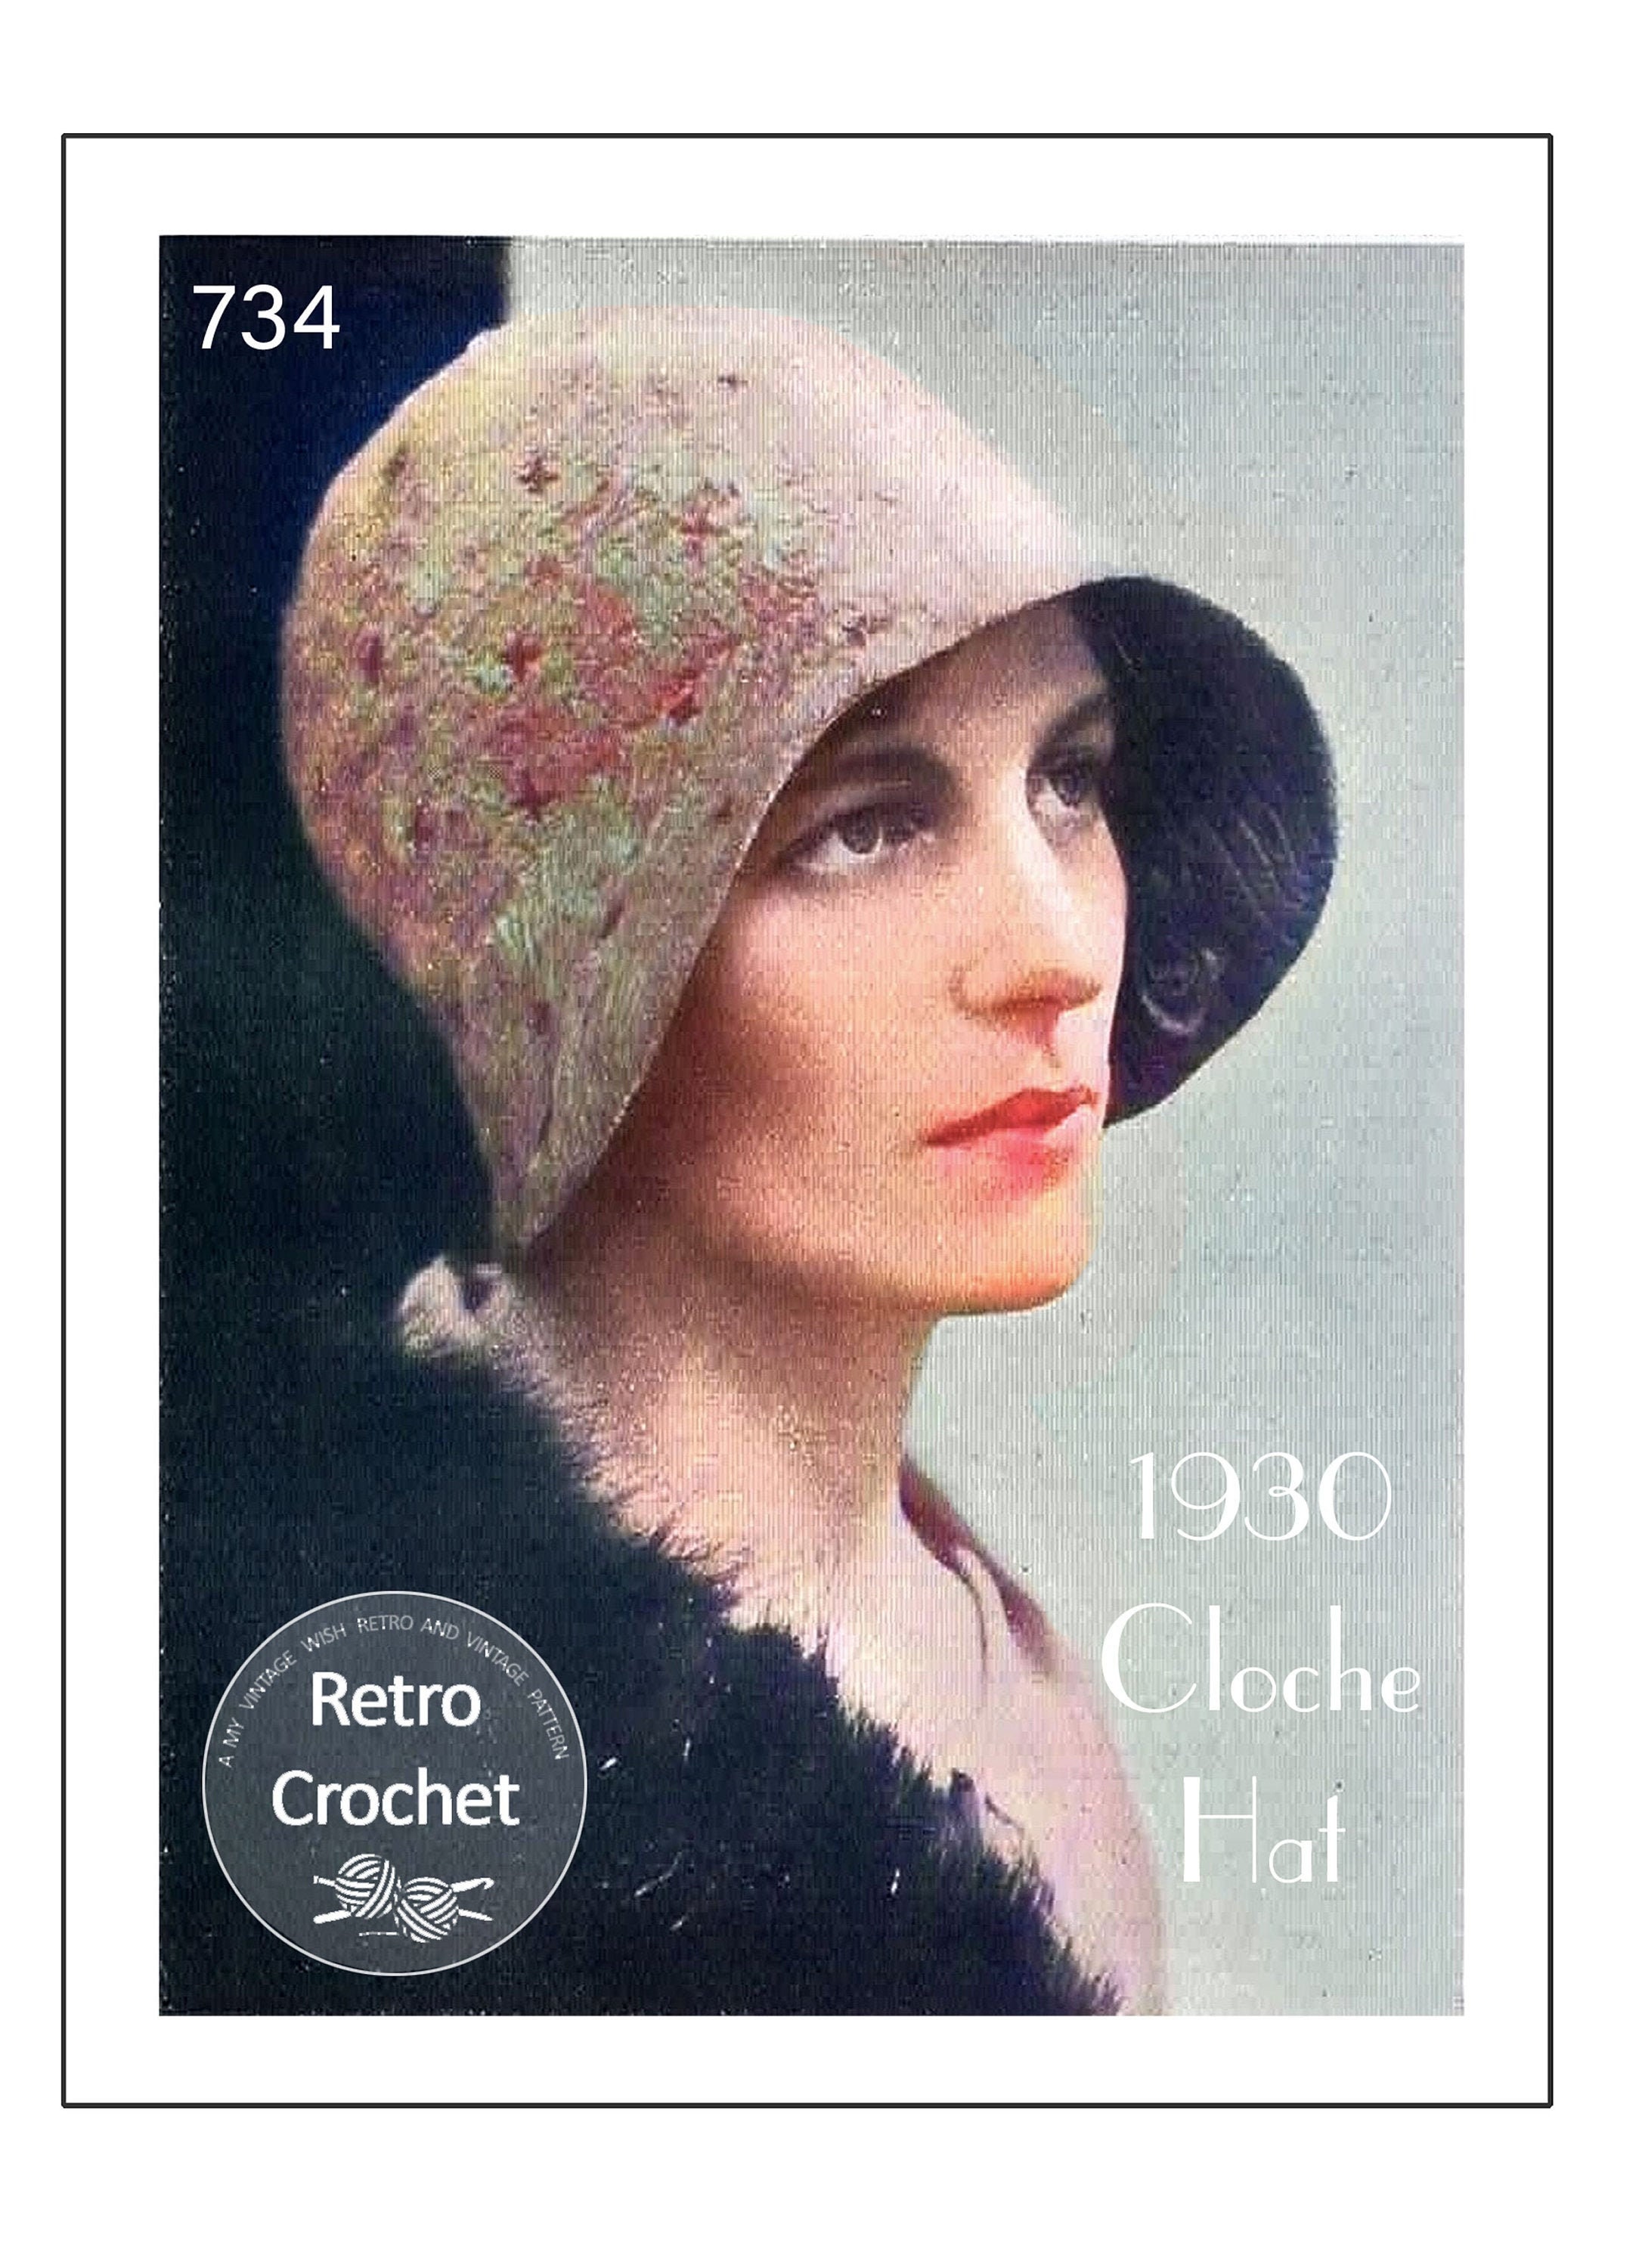 5 Easy Hat Crochet Patterns E-book, 1920's Style Flapper Cloche